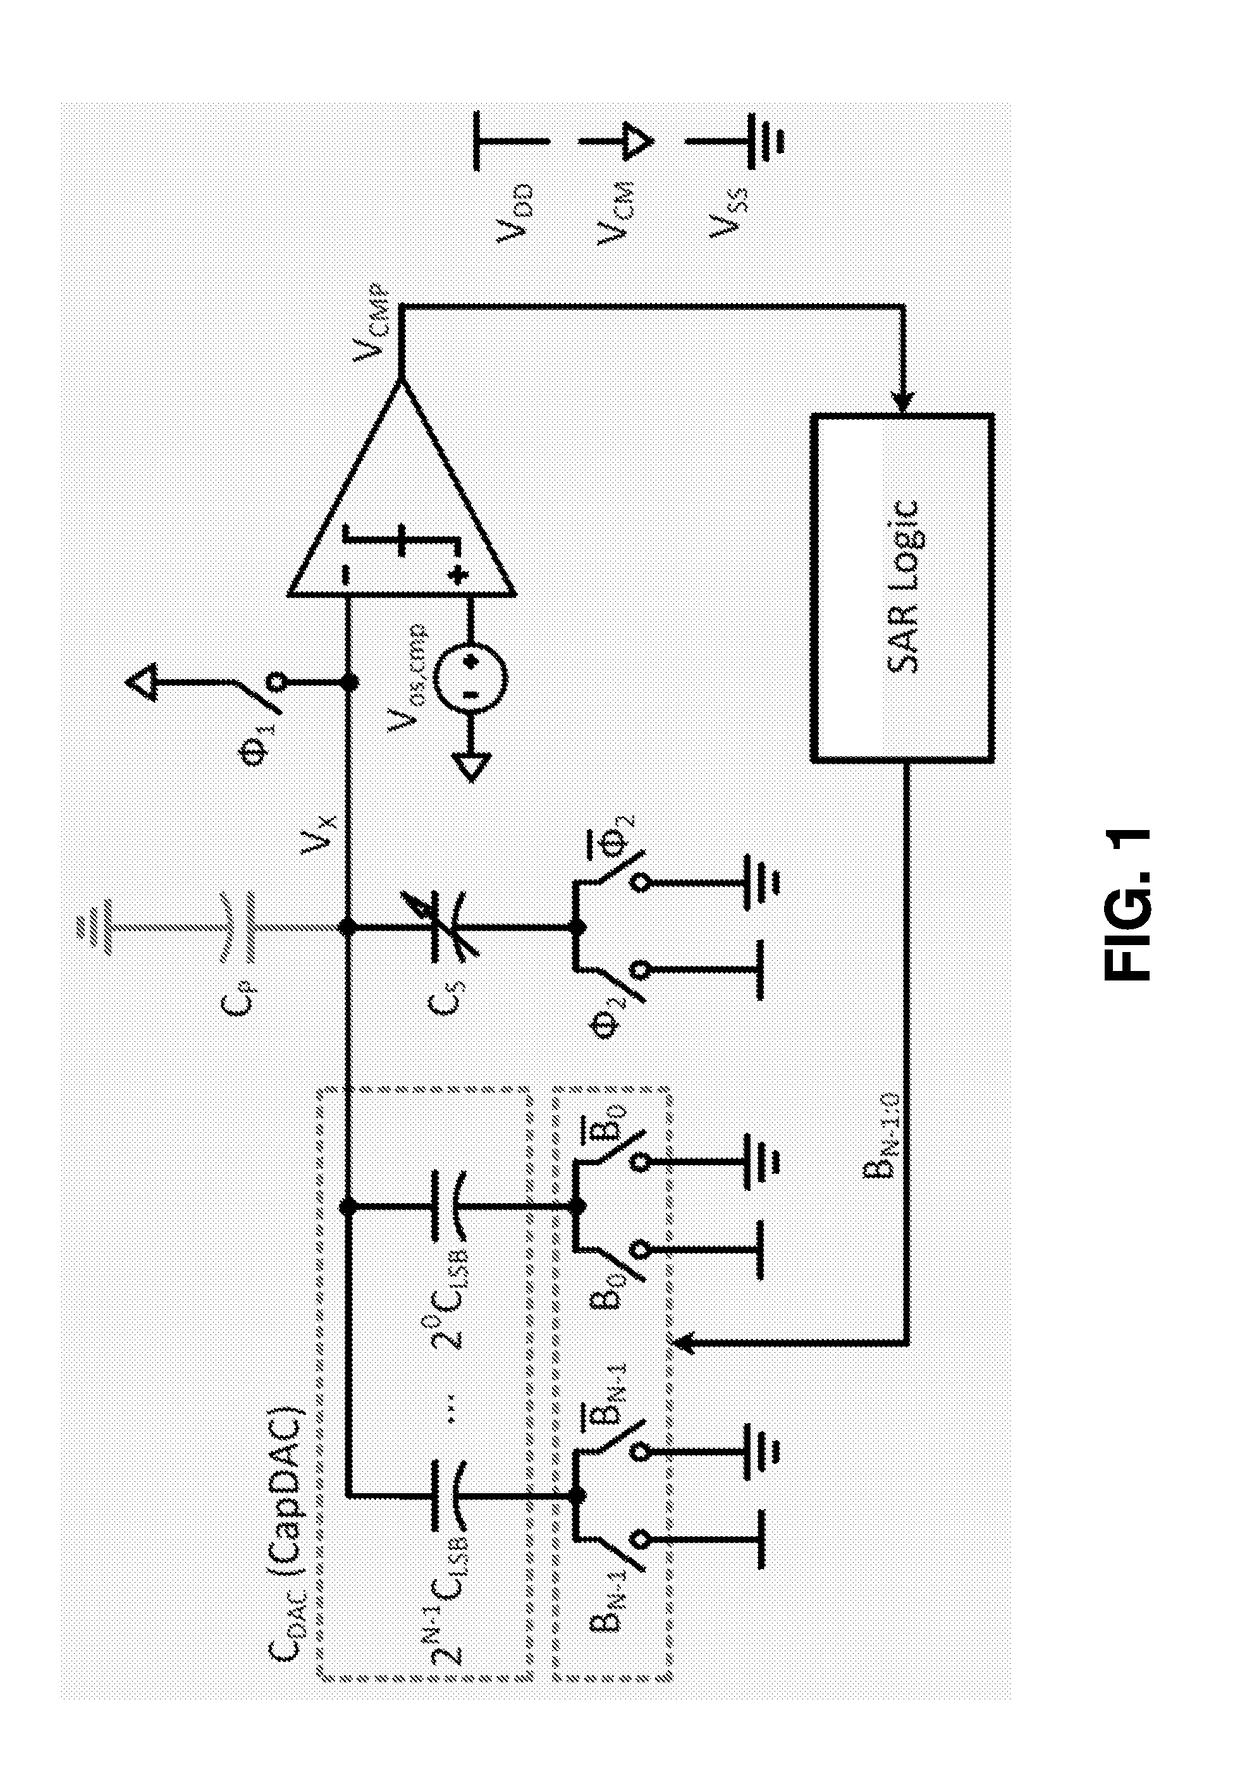 Inverter-based successive approximation capacitance-to-digital converter